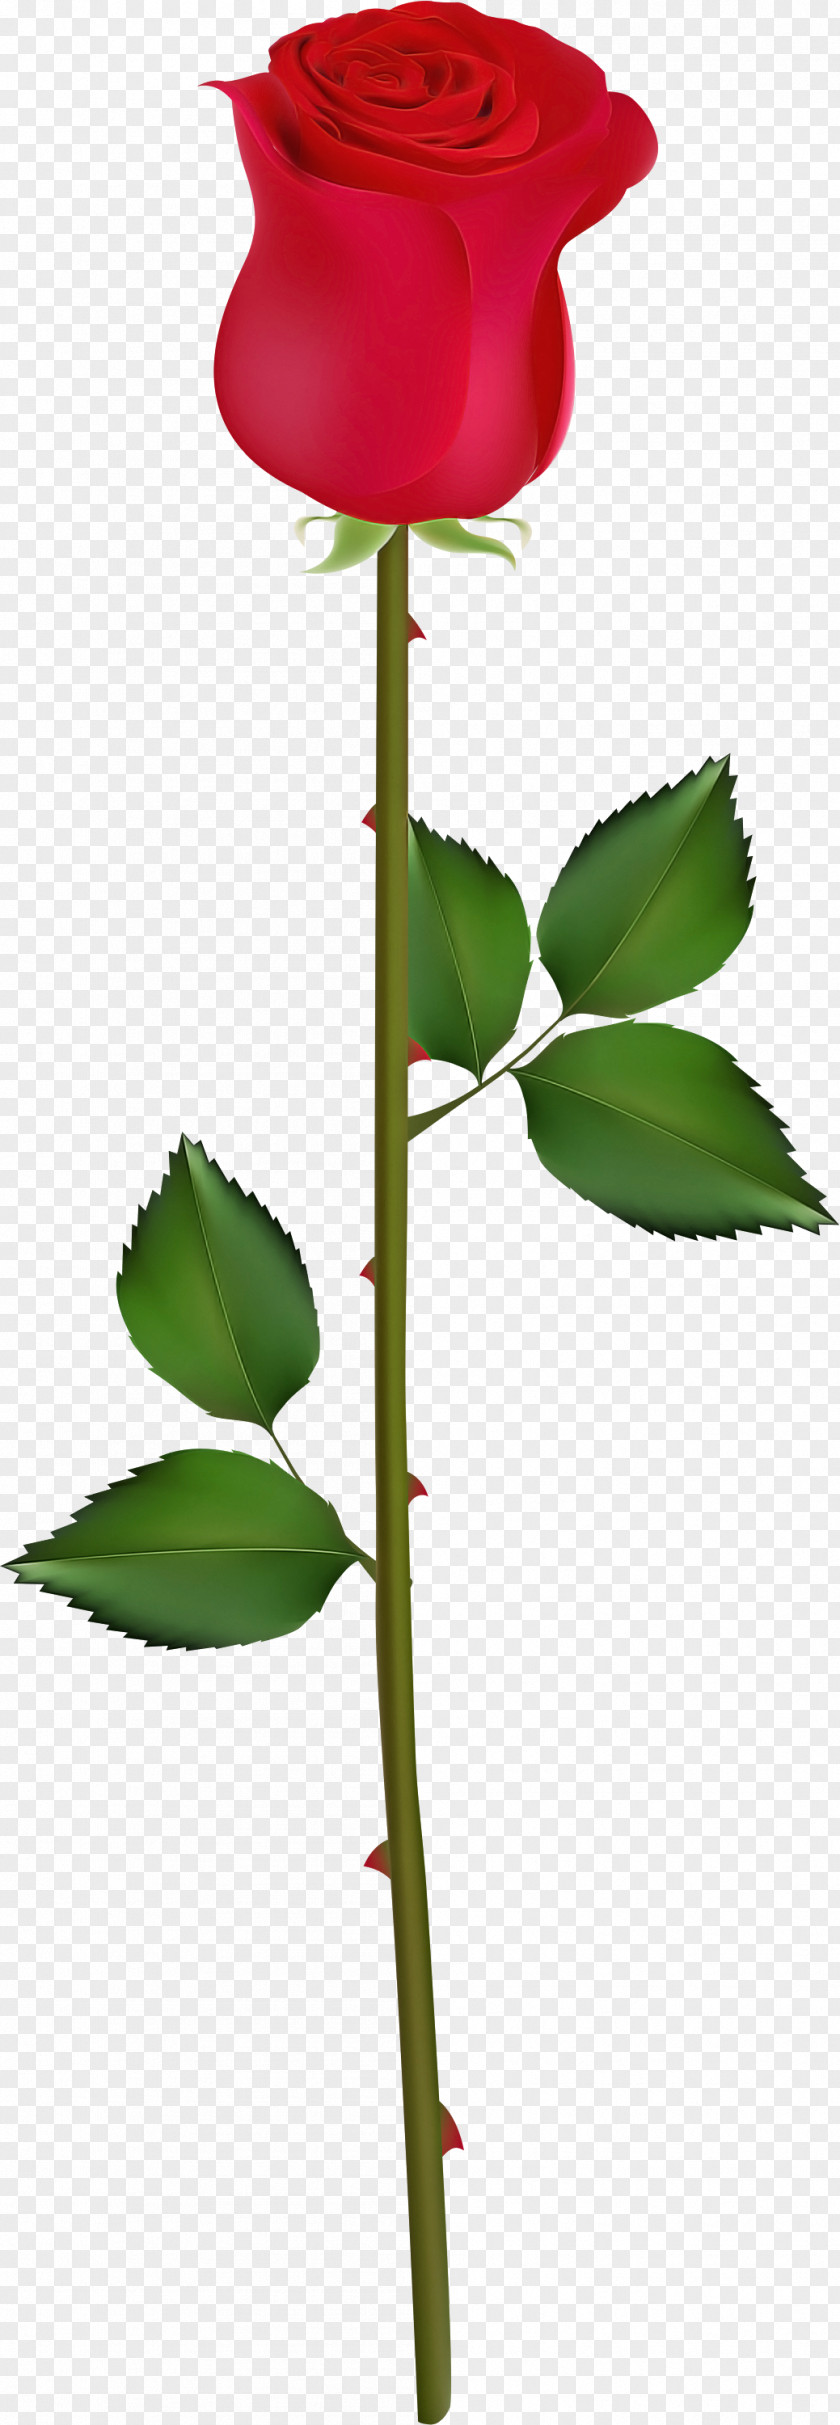 Tree Plant Stem Flower Leaf Flowering PNG